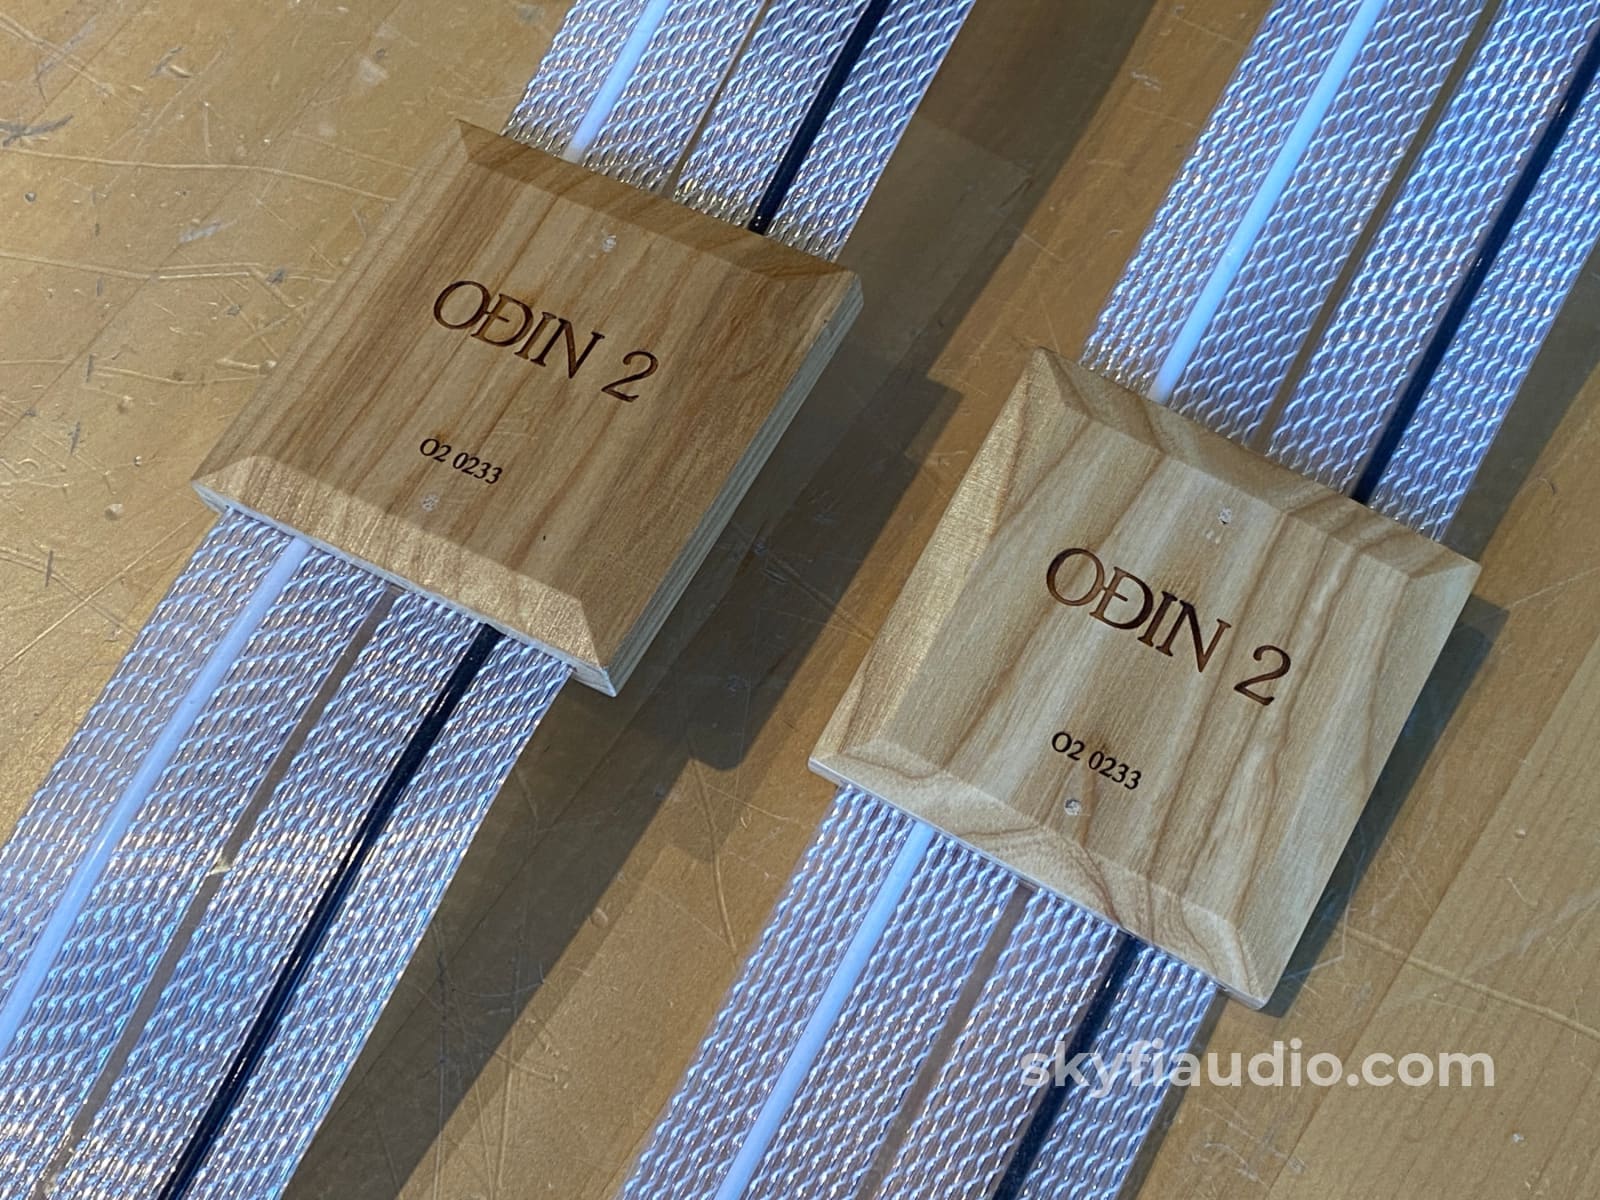 Nordost Odin 2 Speaker Cables 1.8M - Guaranteed Genuine